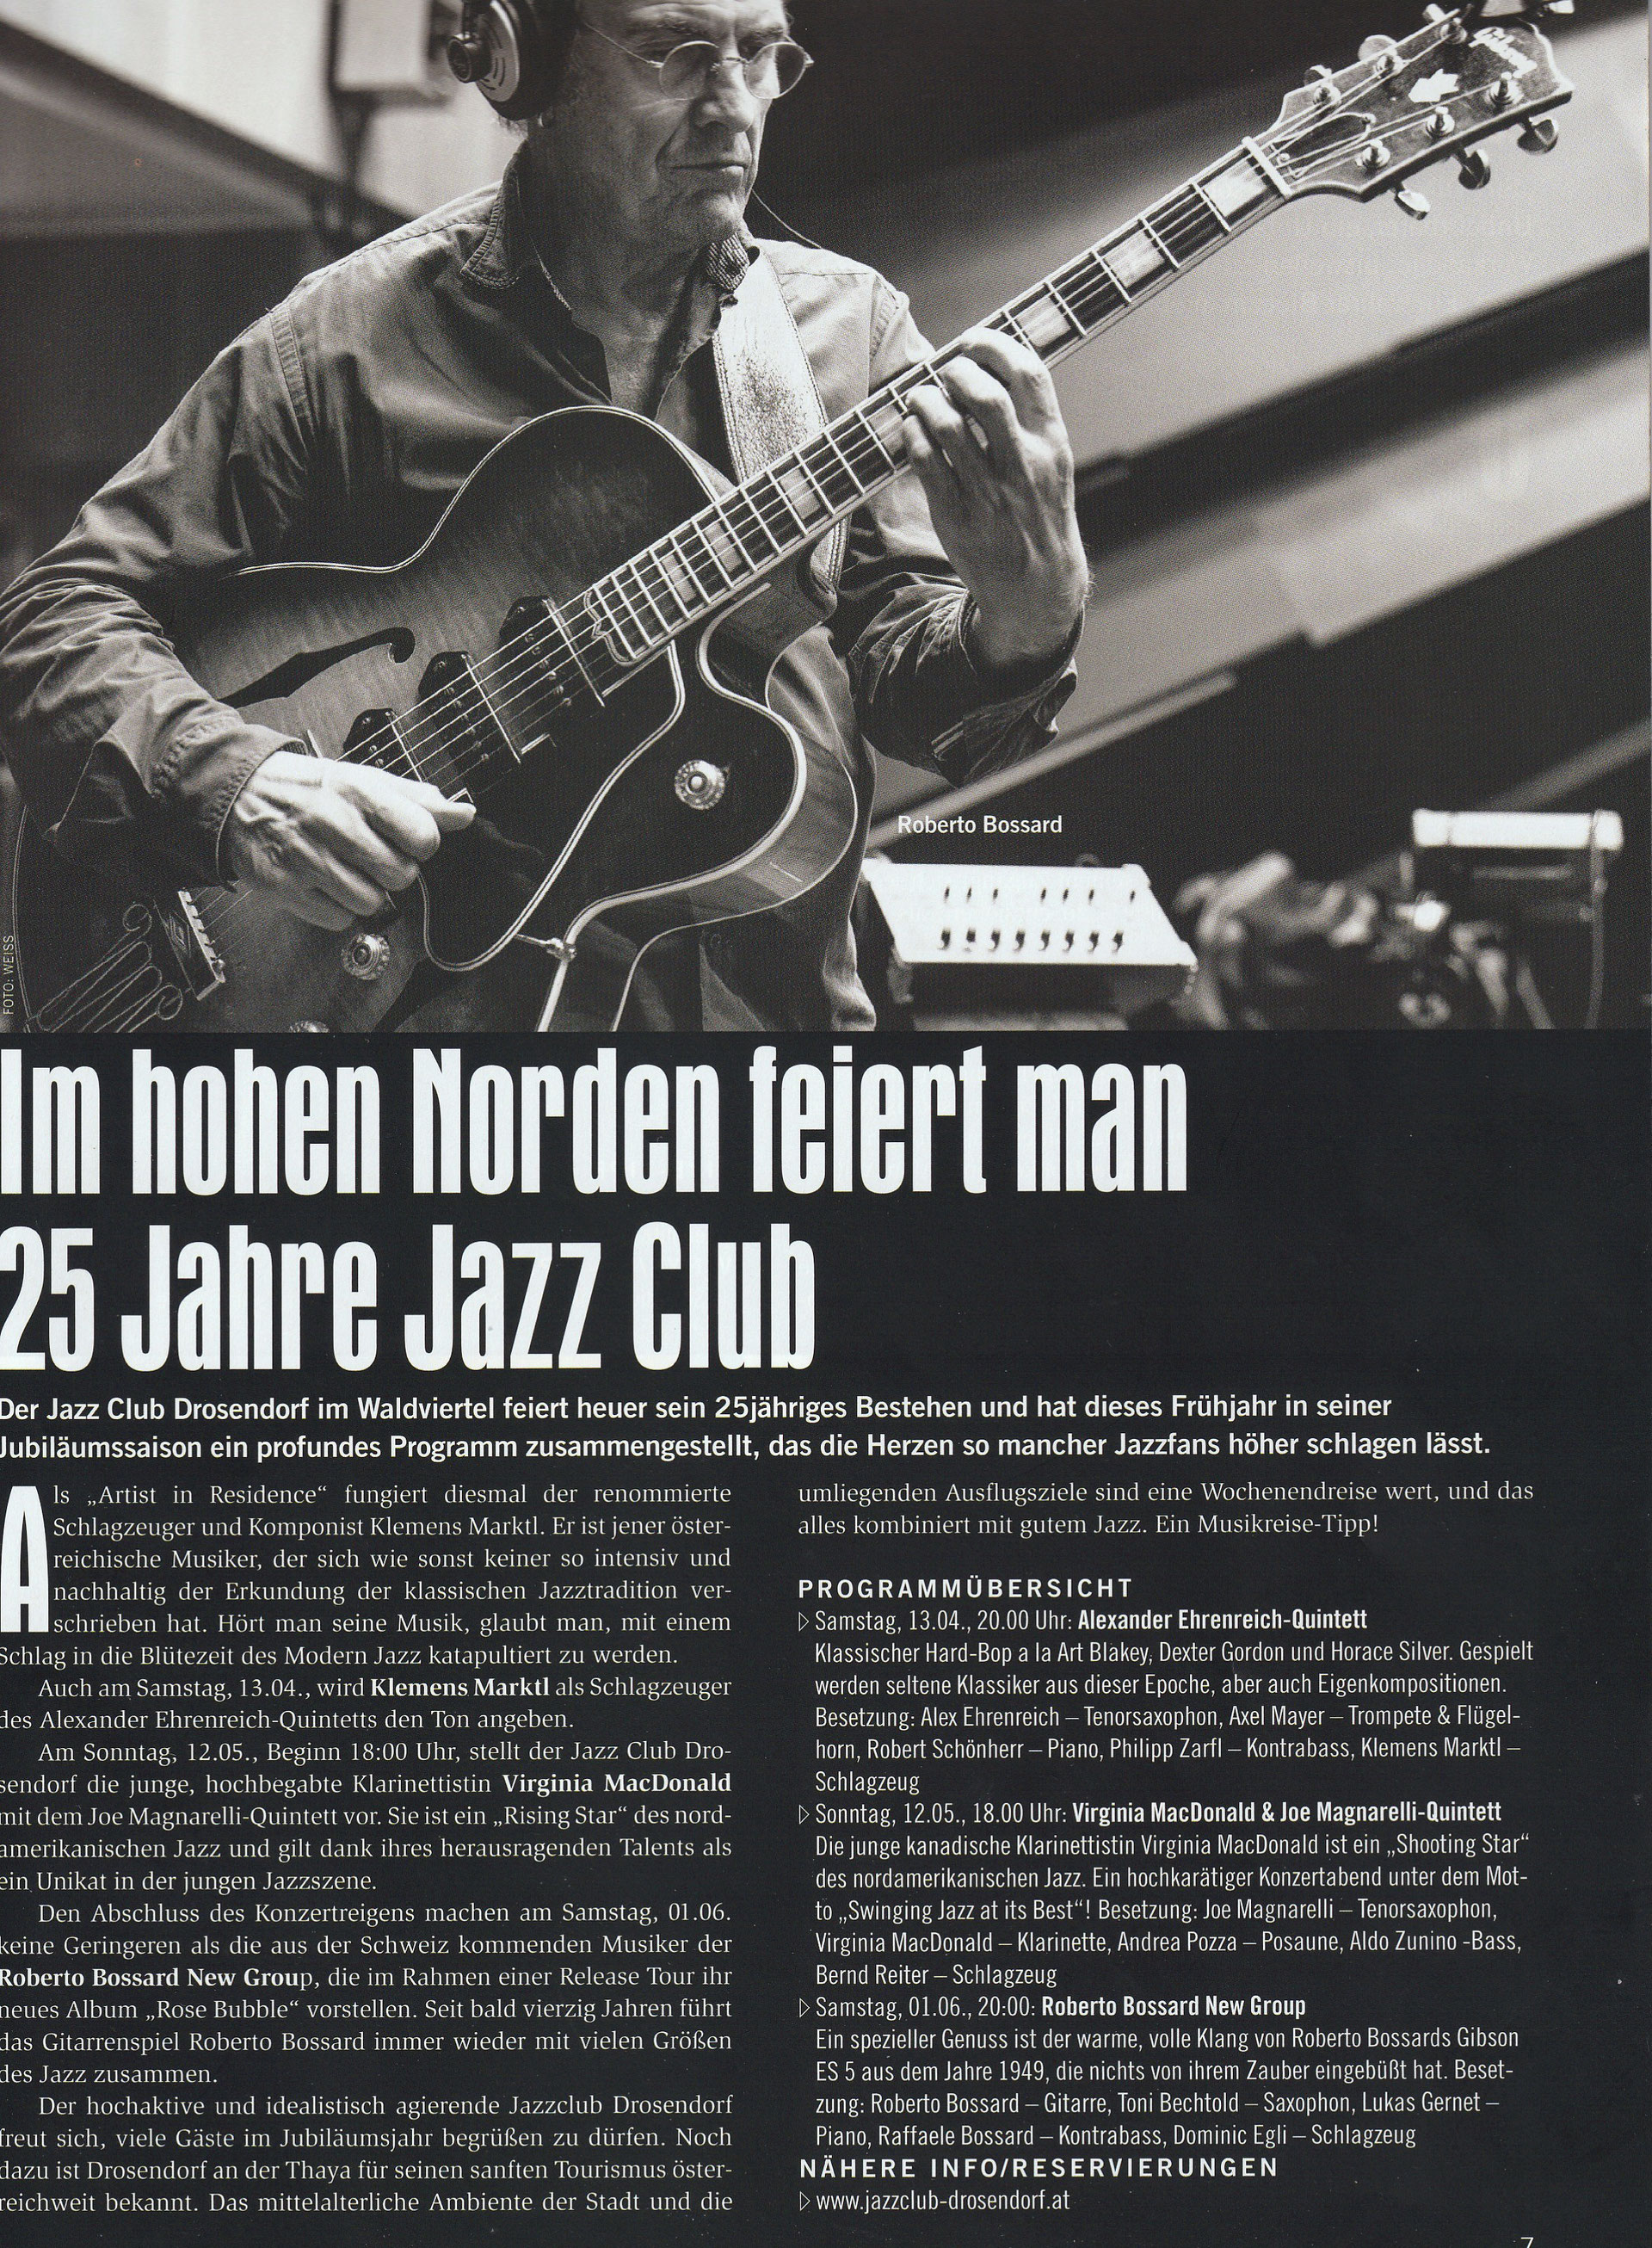 (c) Jazzclub-drosendorf.at